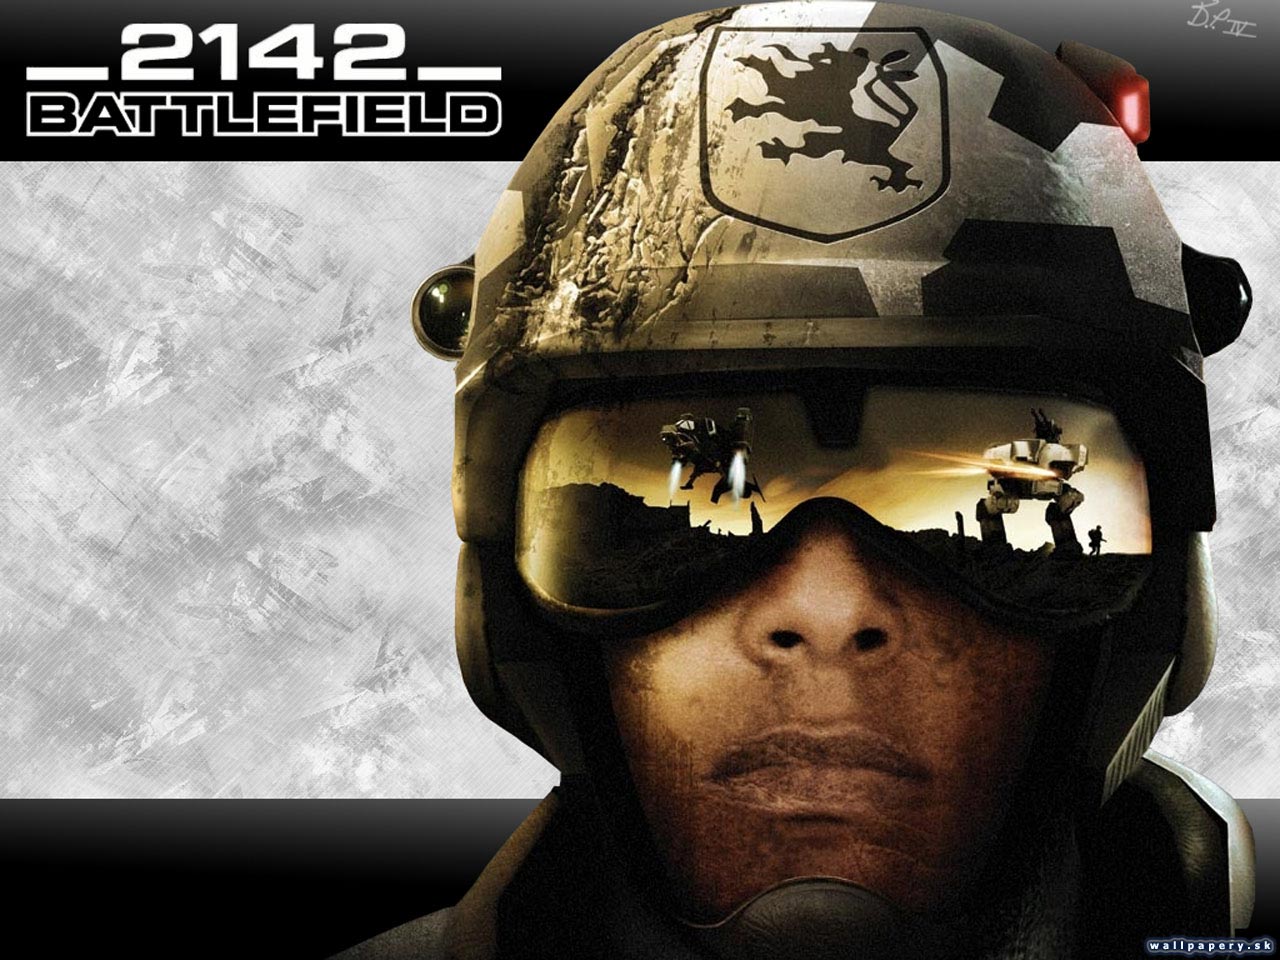 Battlefield 2142 - wallpaper 14